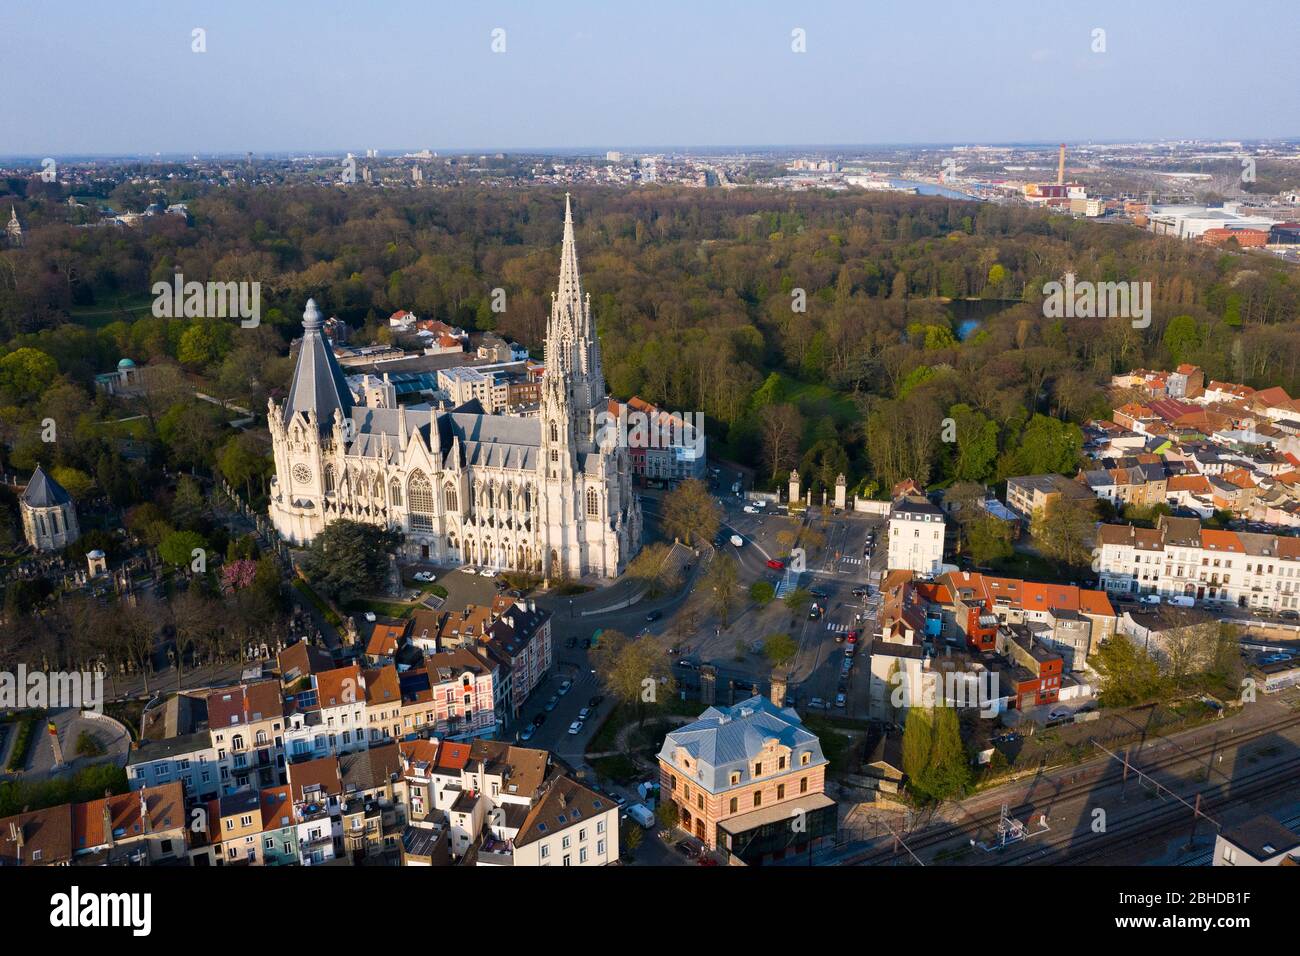 Brussels, Laeken, Belgium, April 8, 2020: aerial view of the Church of Our Lady of Laeken - Église Notre-Dame de Laeken Stock Photo